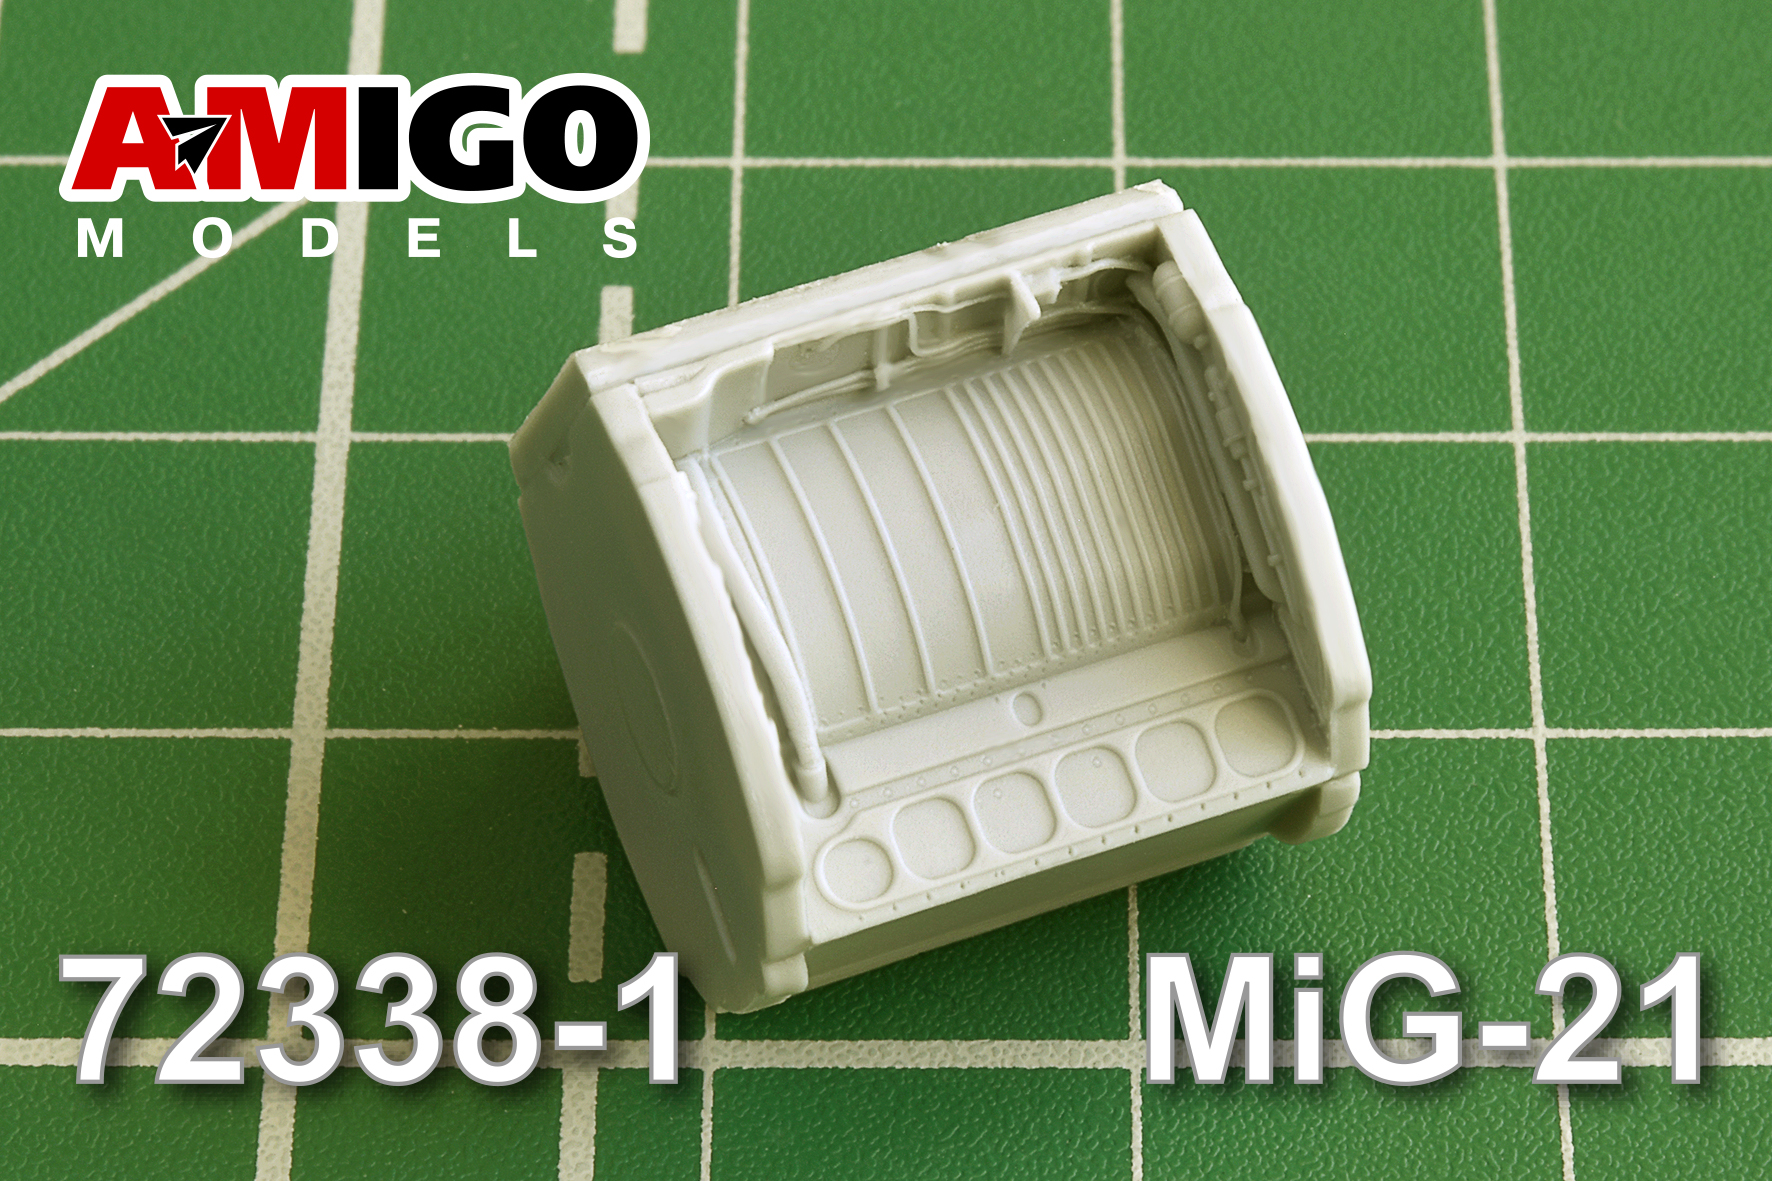 Additions (3D resin printing) 1/72 MiG-21 aircraft landing gear niches (Amigo Models) 